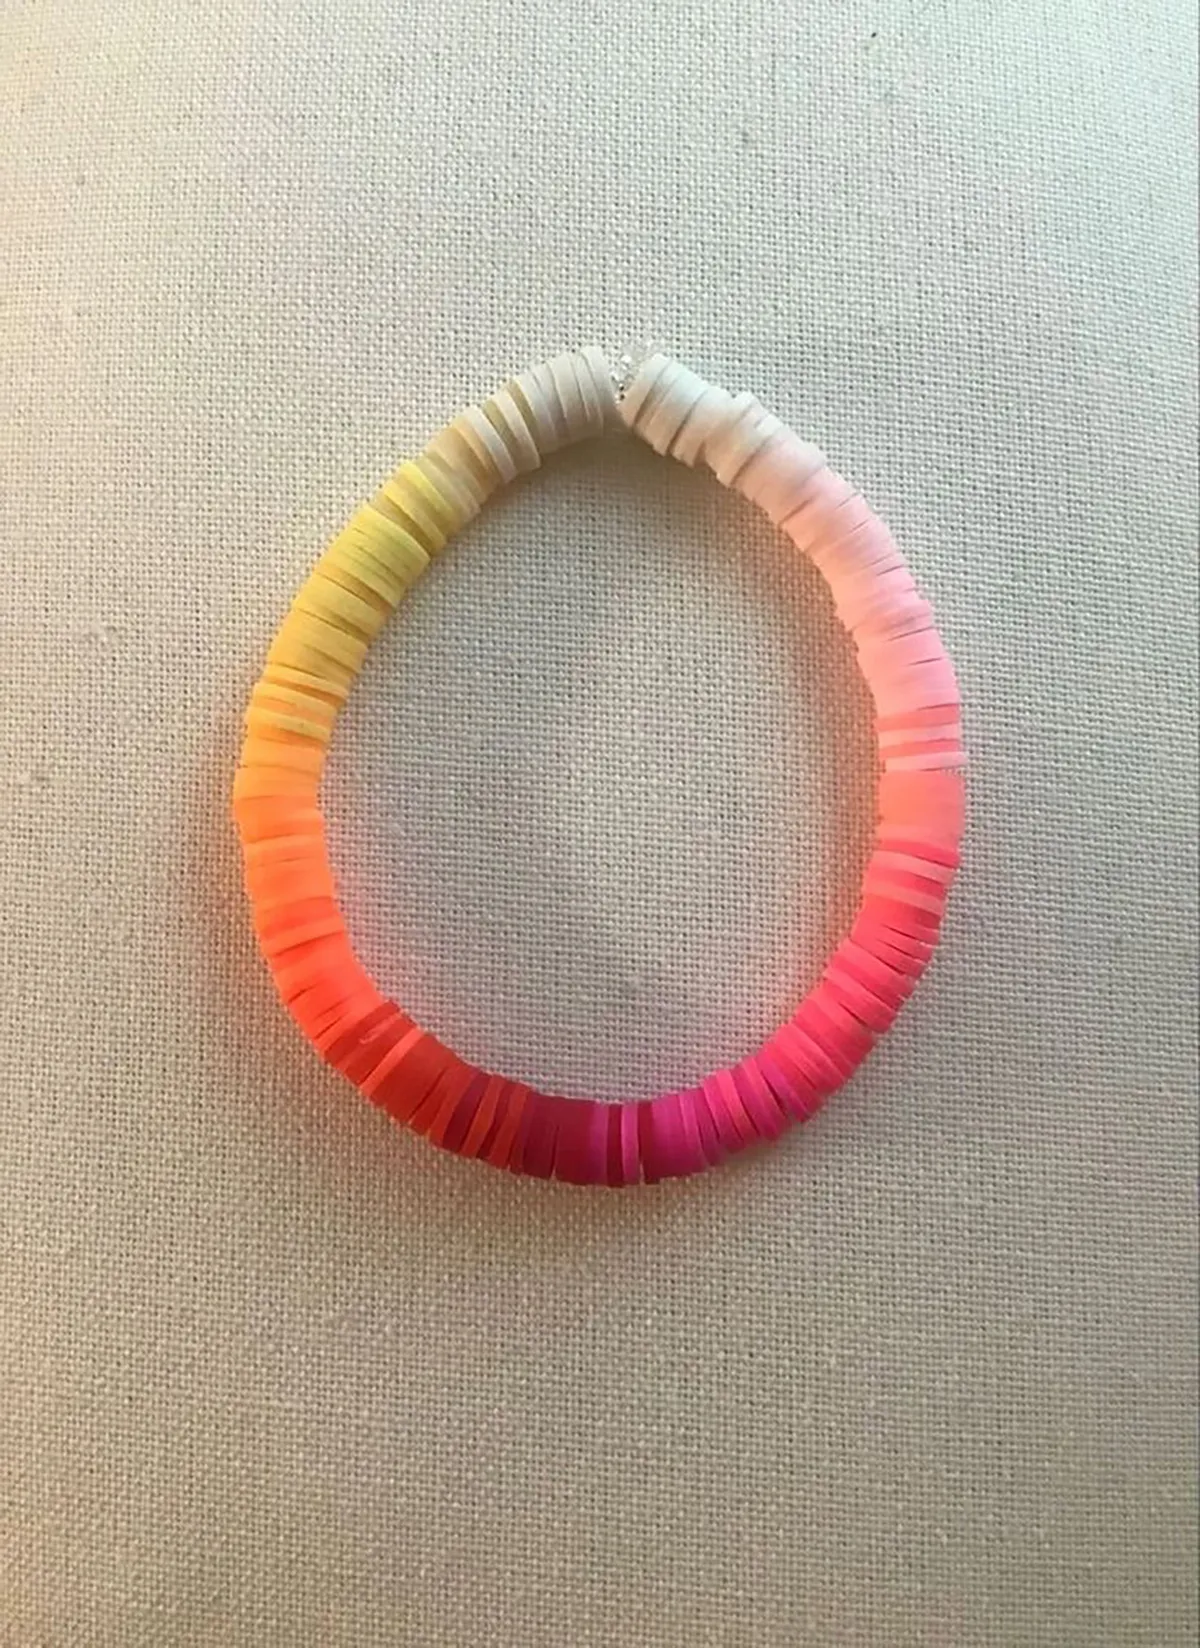 clay bead bracelet kits - ombre